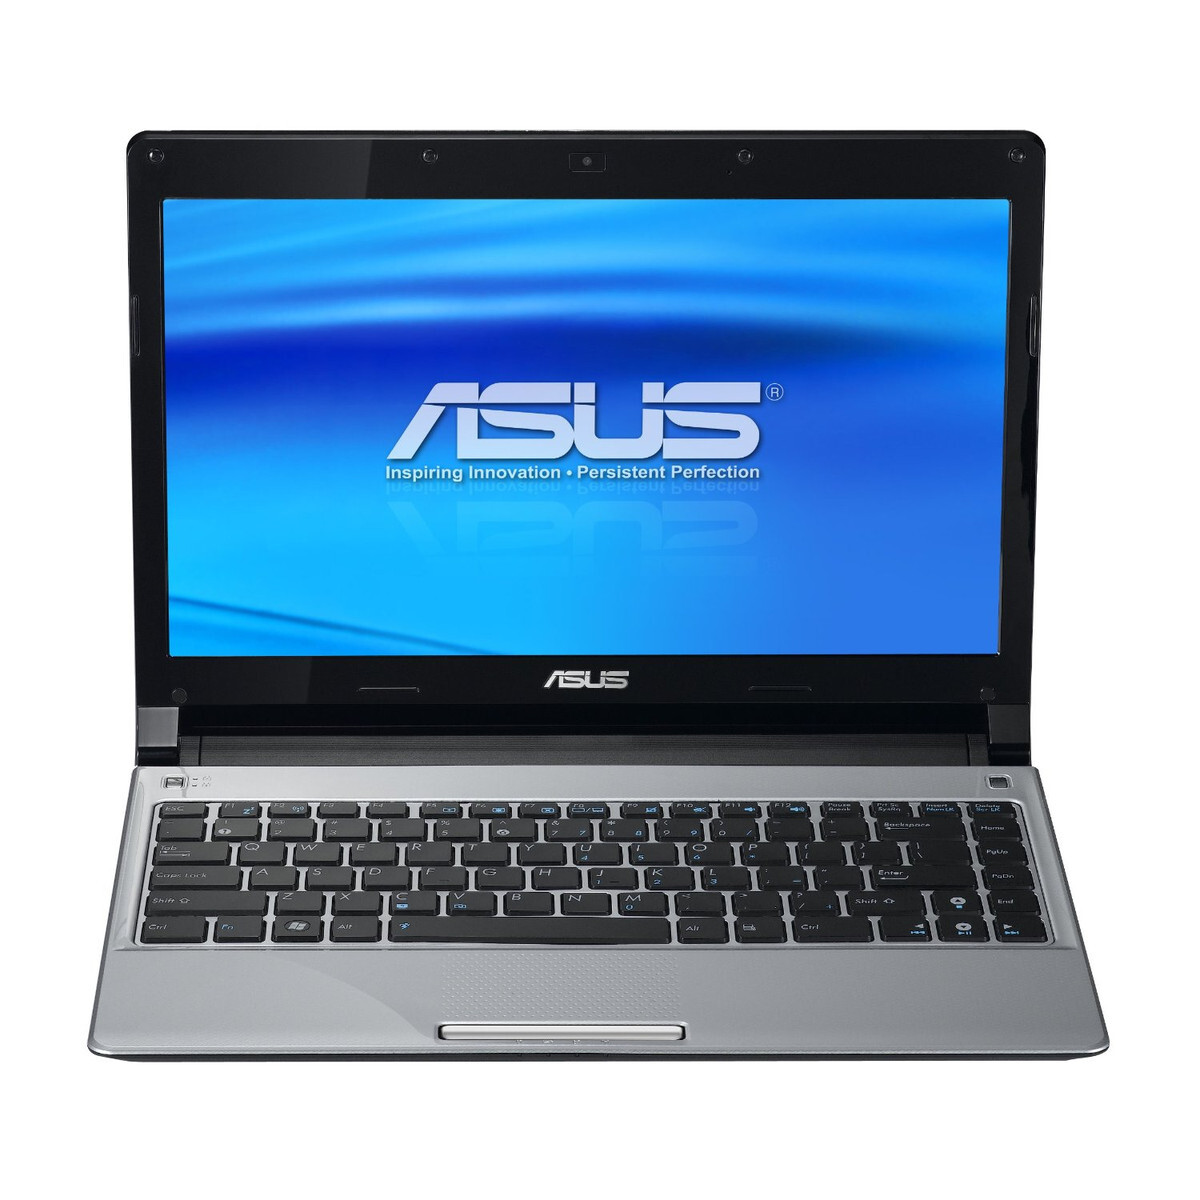 Laptop Asus UL30 Series UL30A-A3B - Intel Core 2 Duo SU7300 1.3GHz, 3GB RAM, 250GB HDD, VGA Intel GMA 4500MHD, 13.3inch